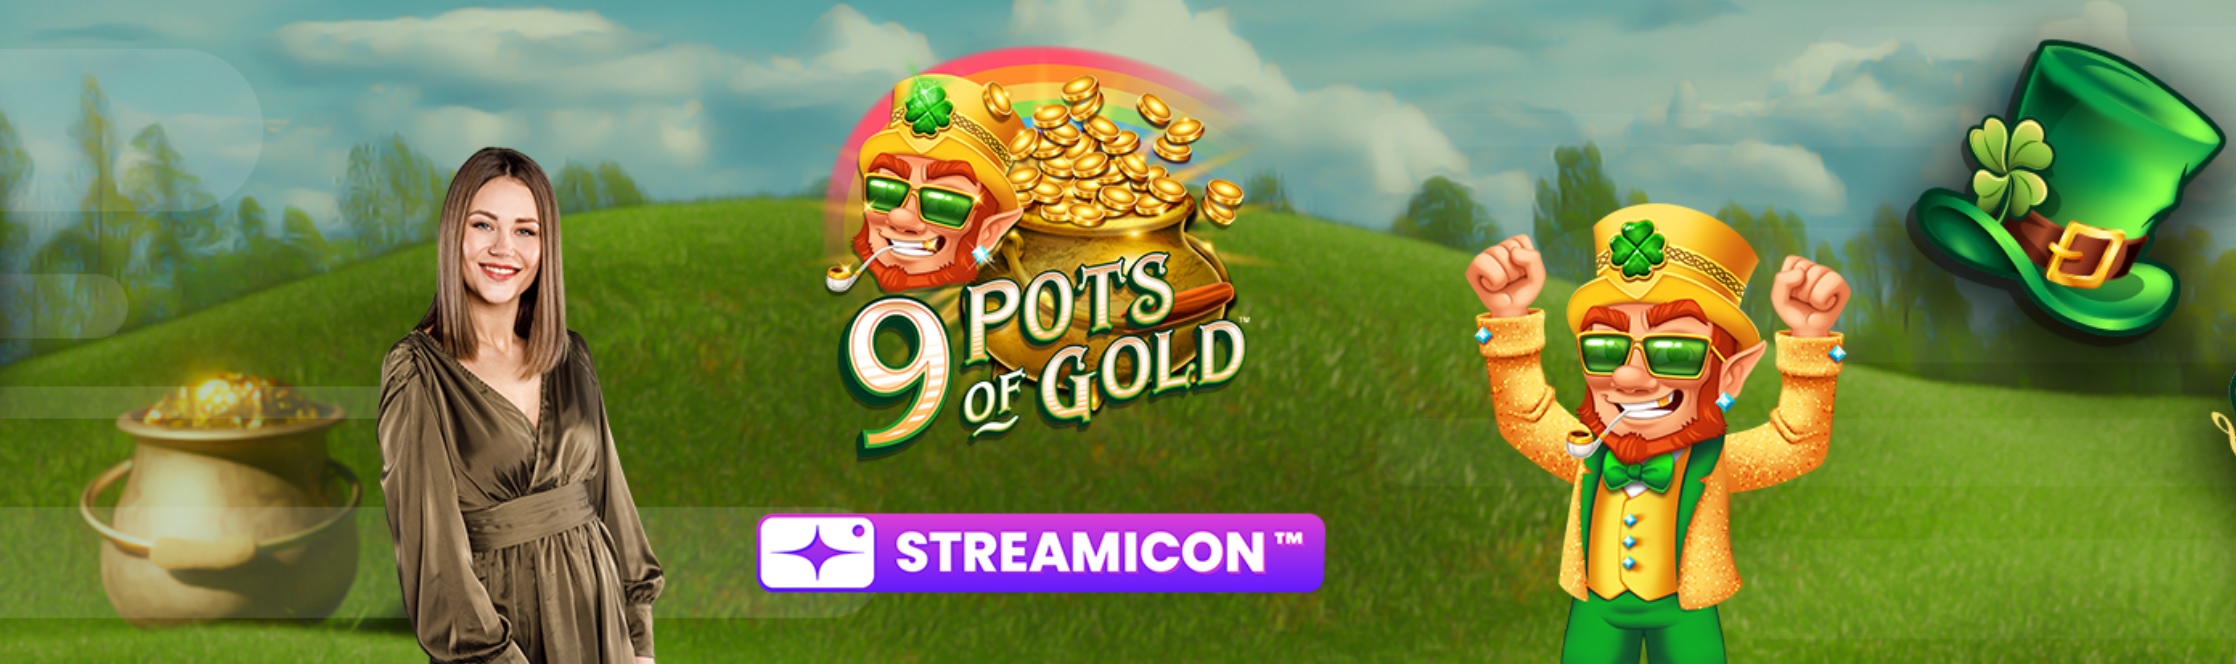 9 pots of gold live slot